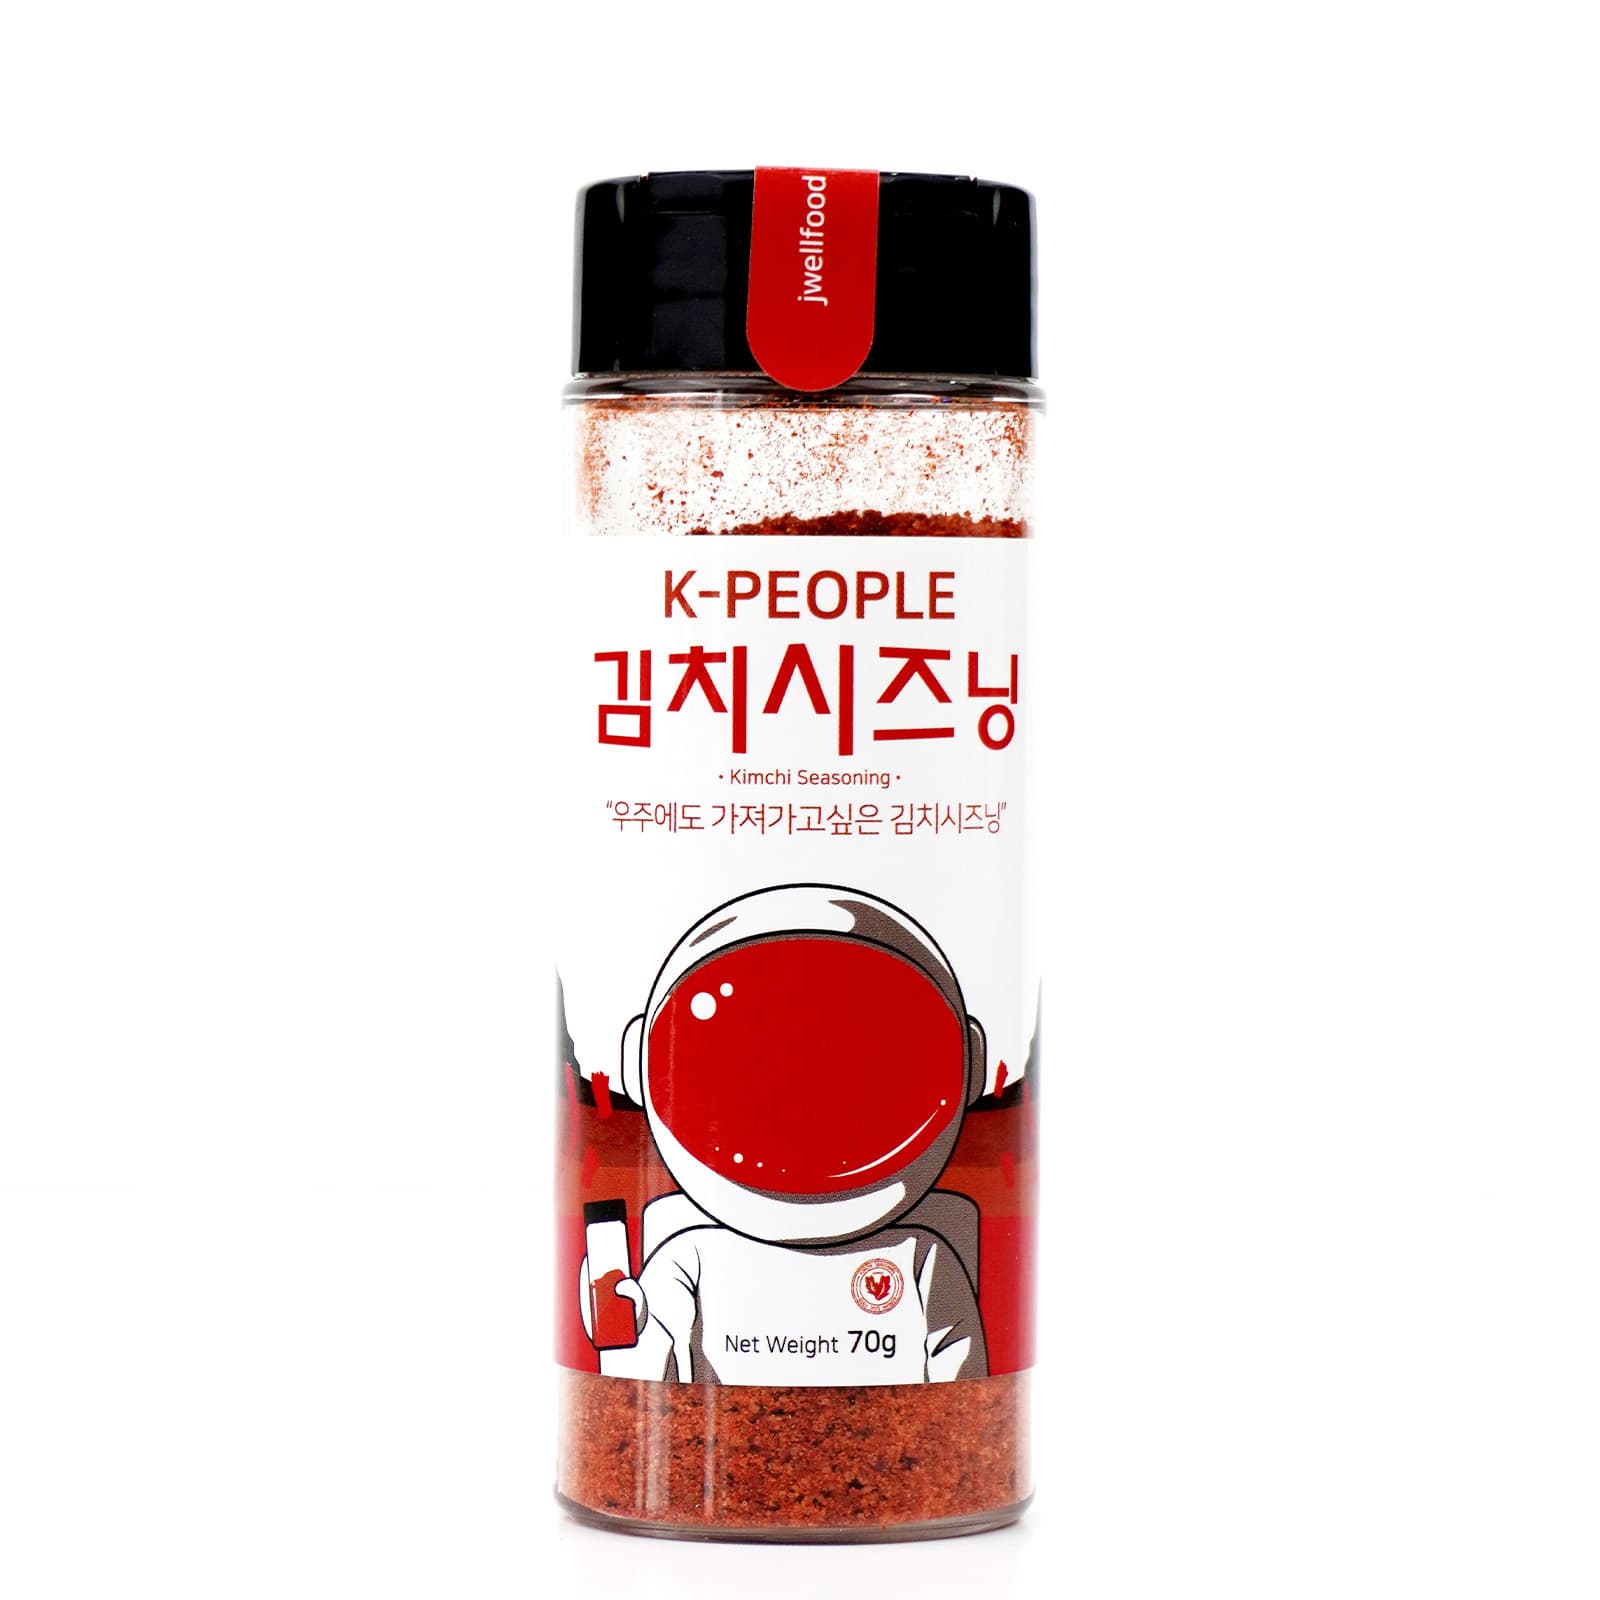 K_PEOPLE Kimchi Seasoning